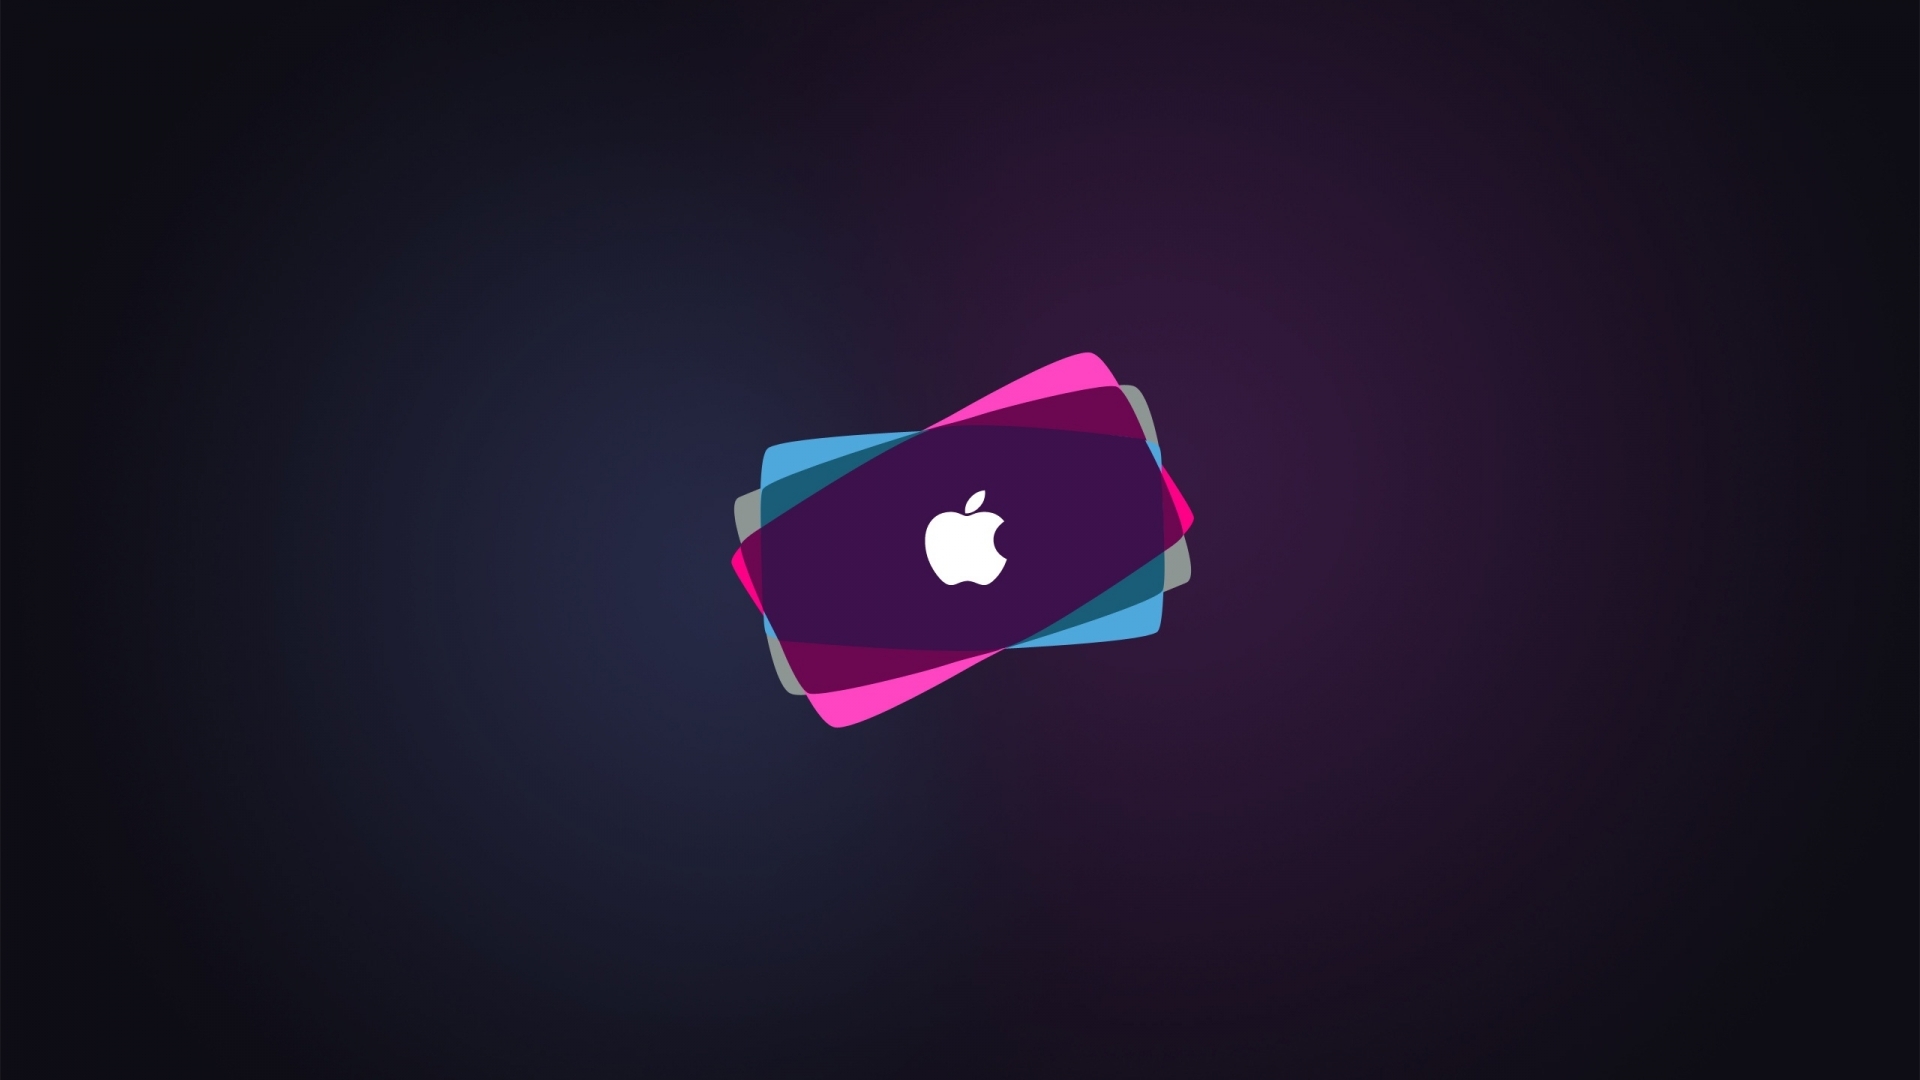 Apple logo wallpaper